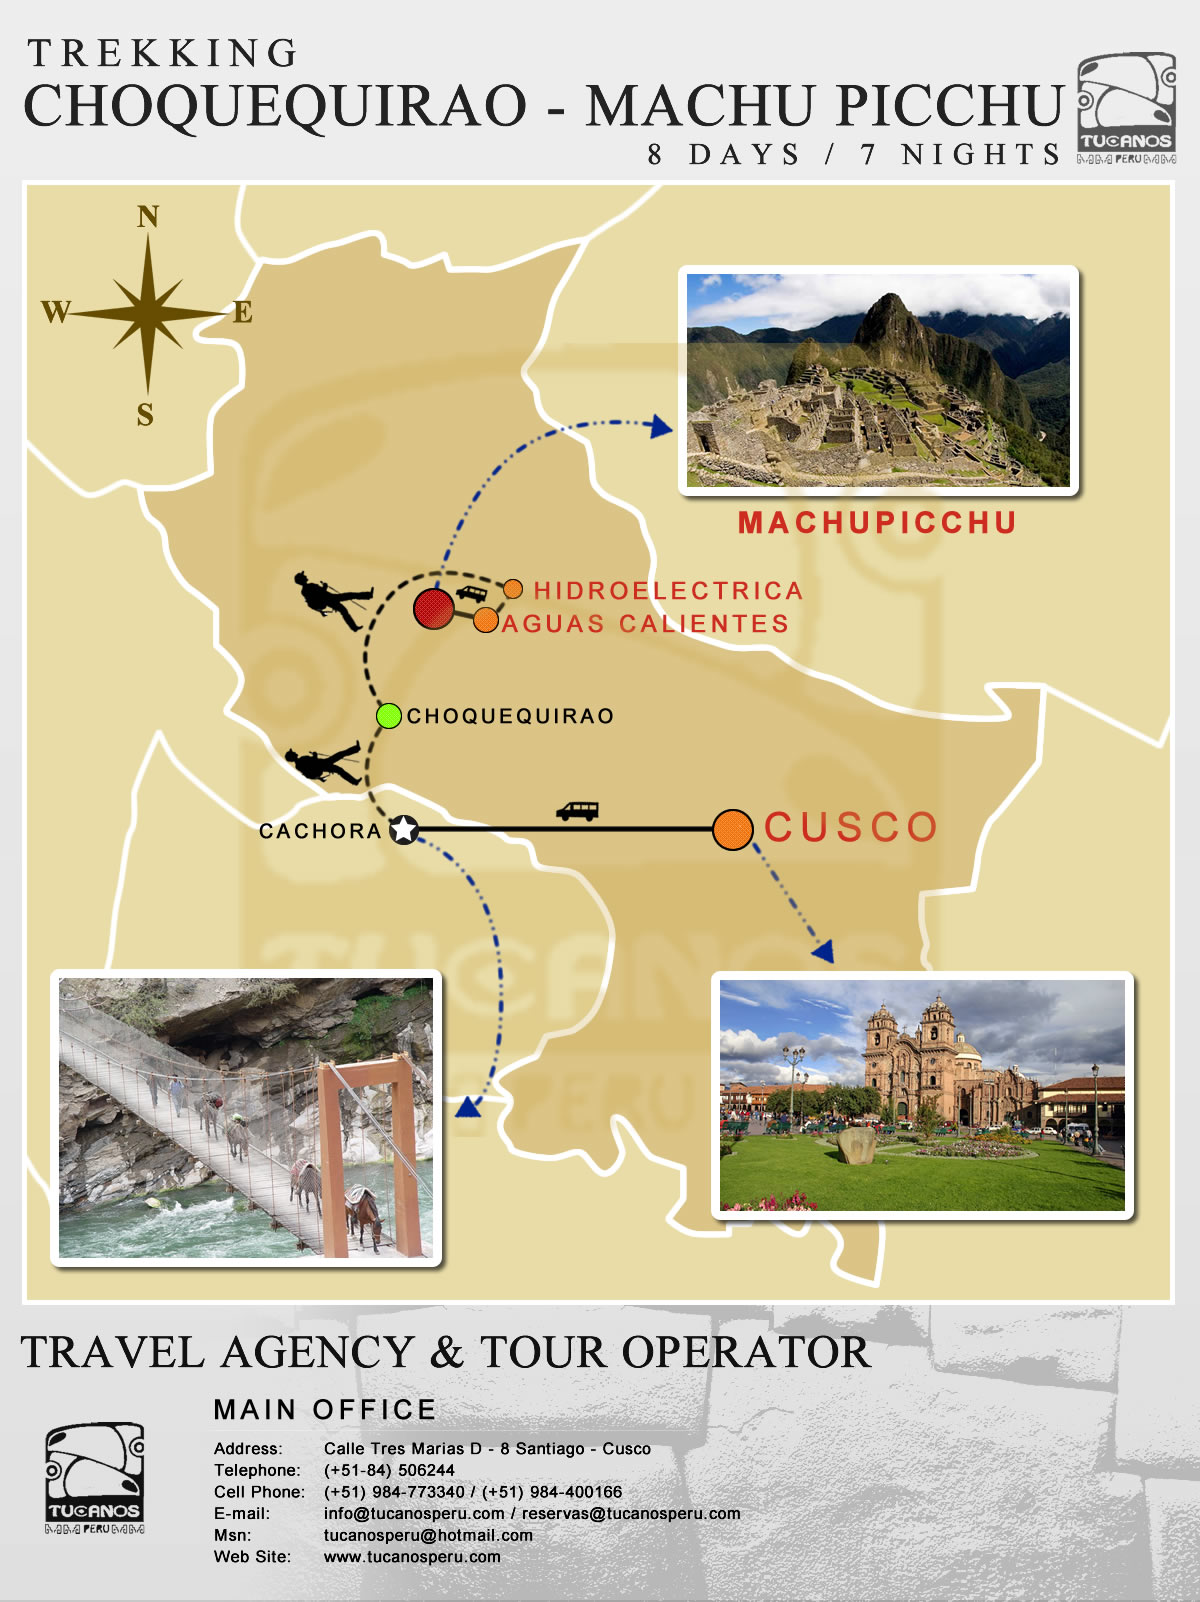 Choquequirao Trek - Machu Picchu 8 Days